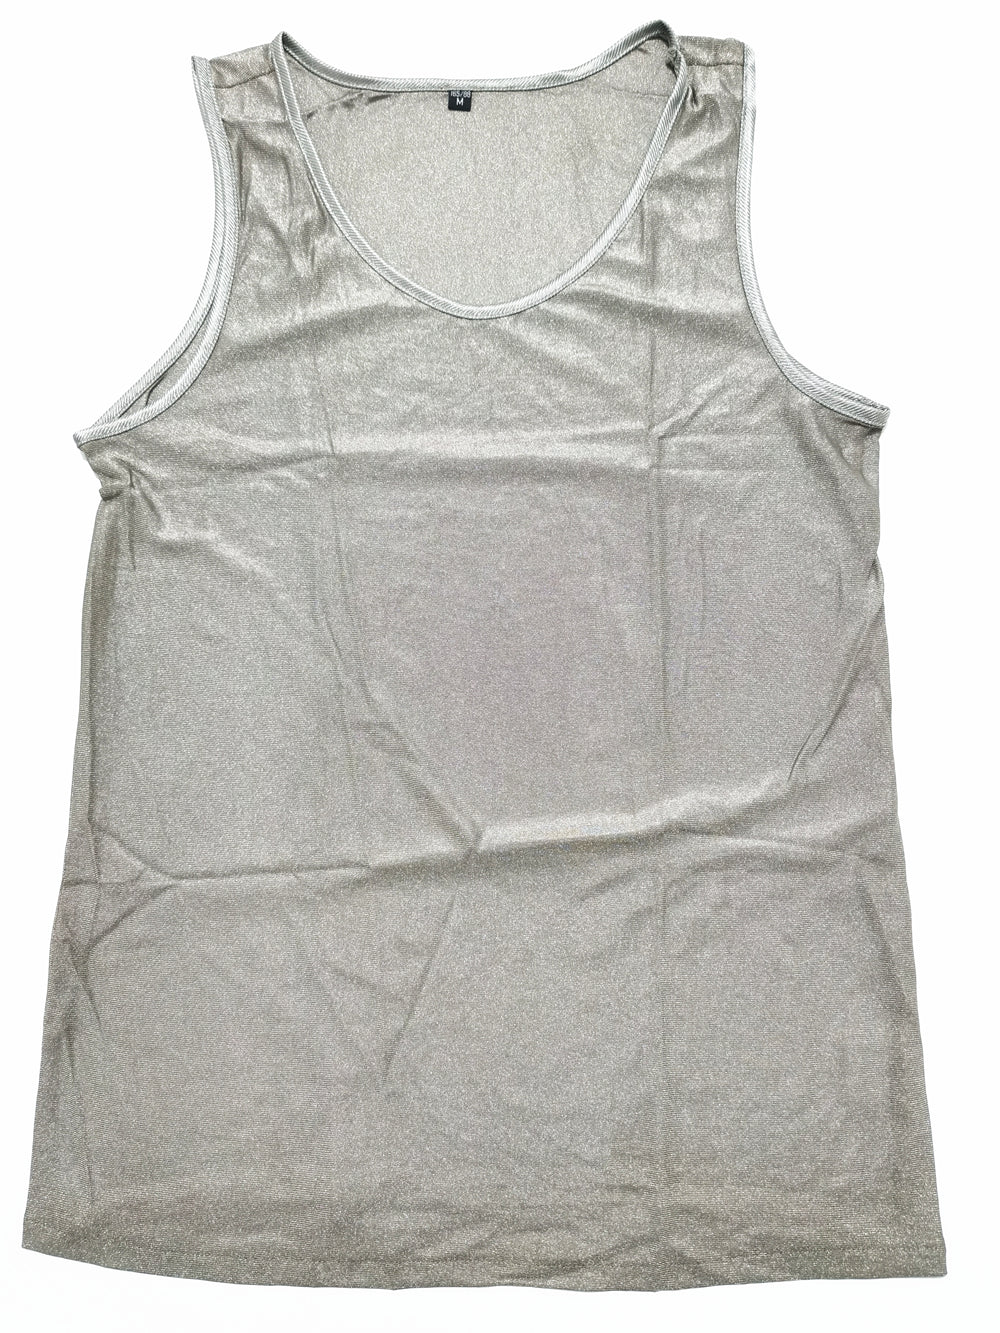 Julam EMF Radiation Shield Men T-Shirt EMF Shielding Anti-Radiation Silver  Fiber Clothes Fara-day Fabric protection clothing short Sleeve Tops  Underwear in style 